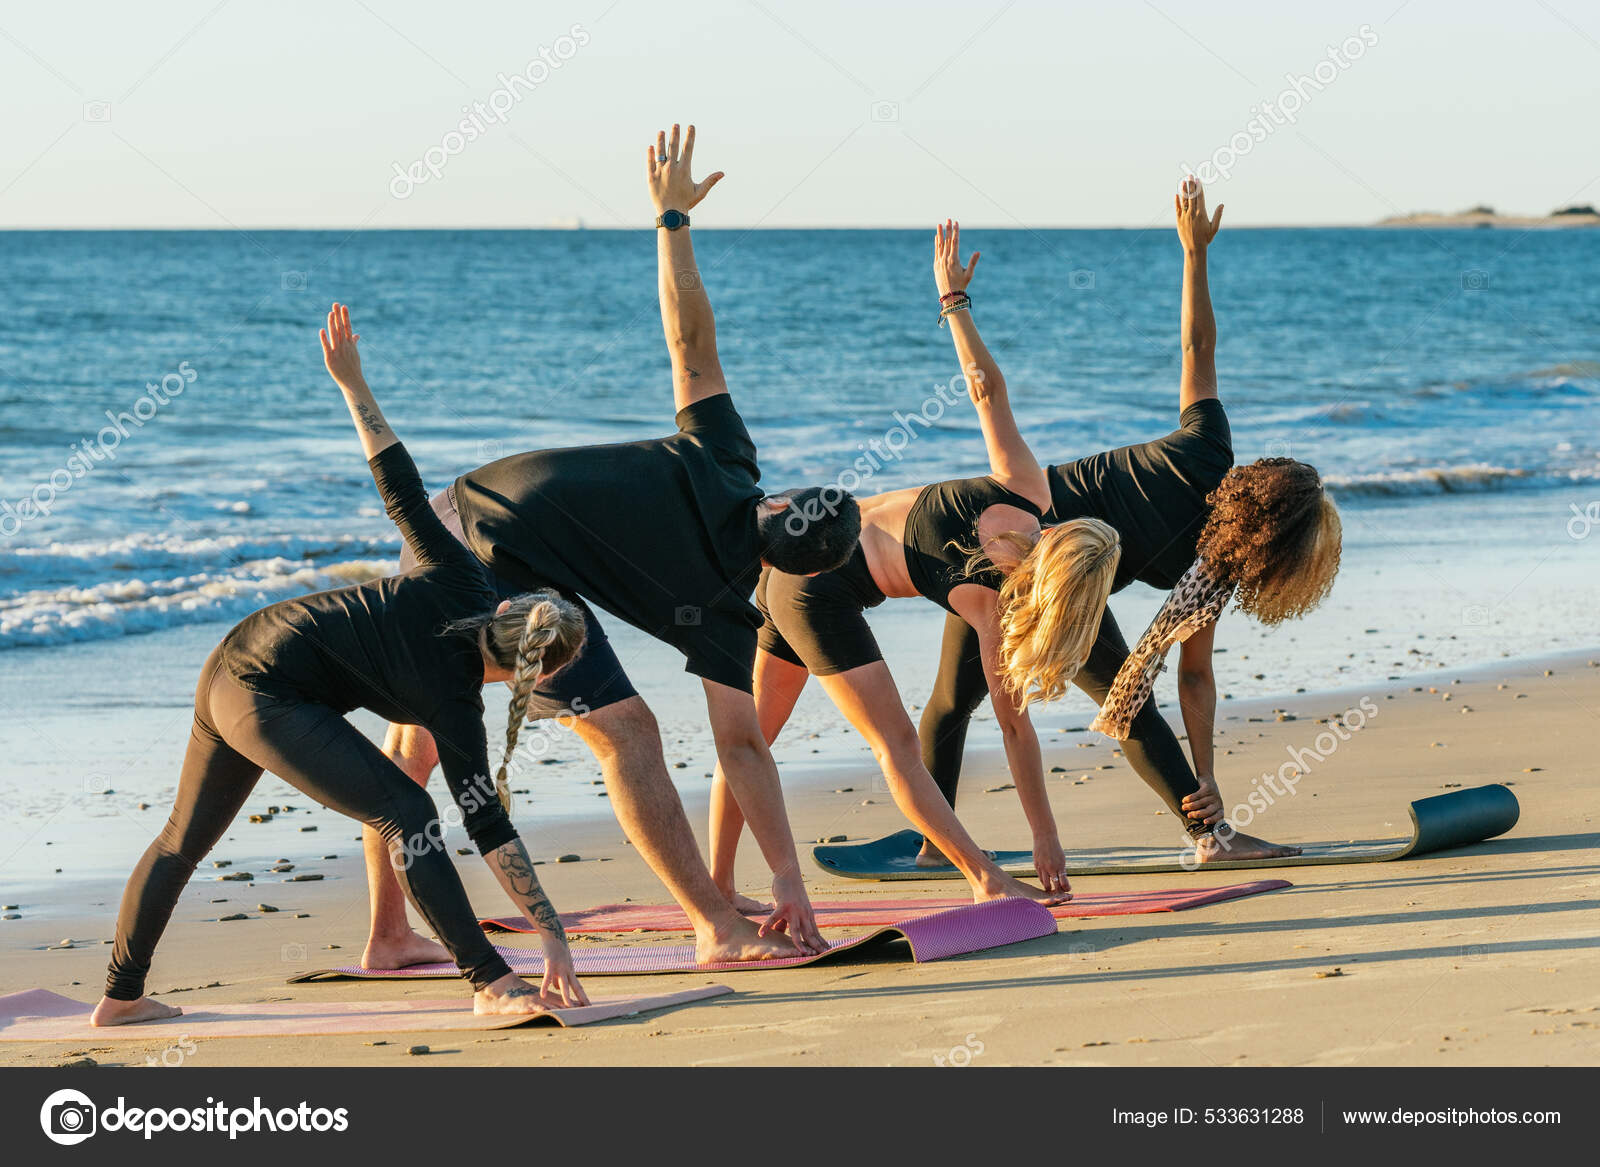 https://st.depositphotos.com/53611010/53363/i/1600/depositphotos_533631288-stock-photo-people-of-a-yoga-class.jpg